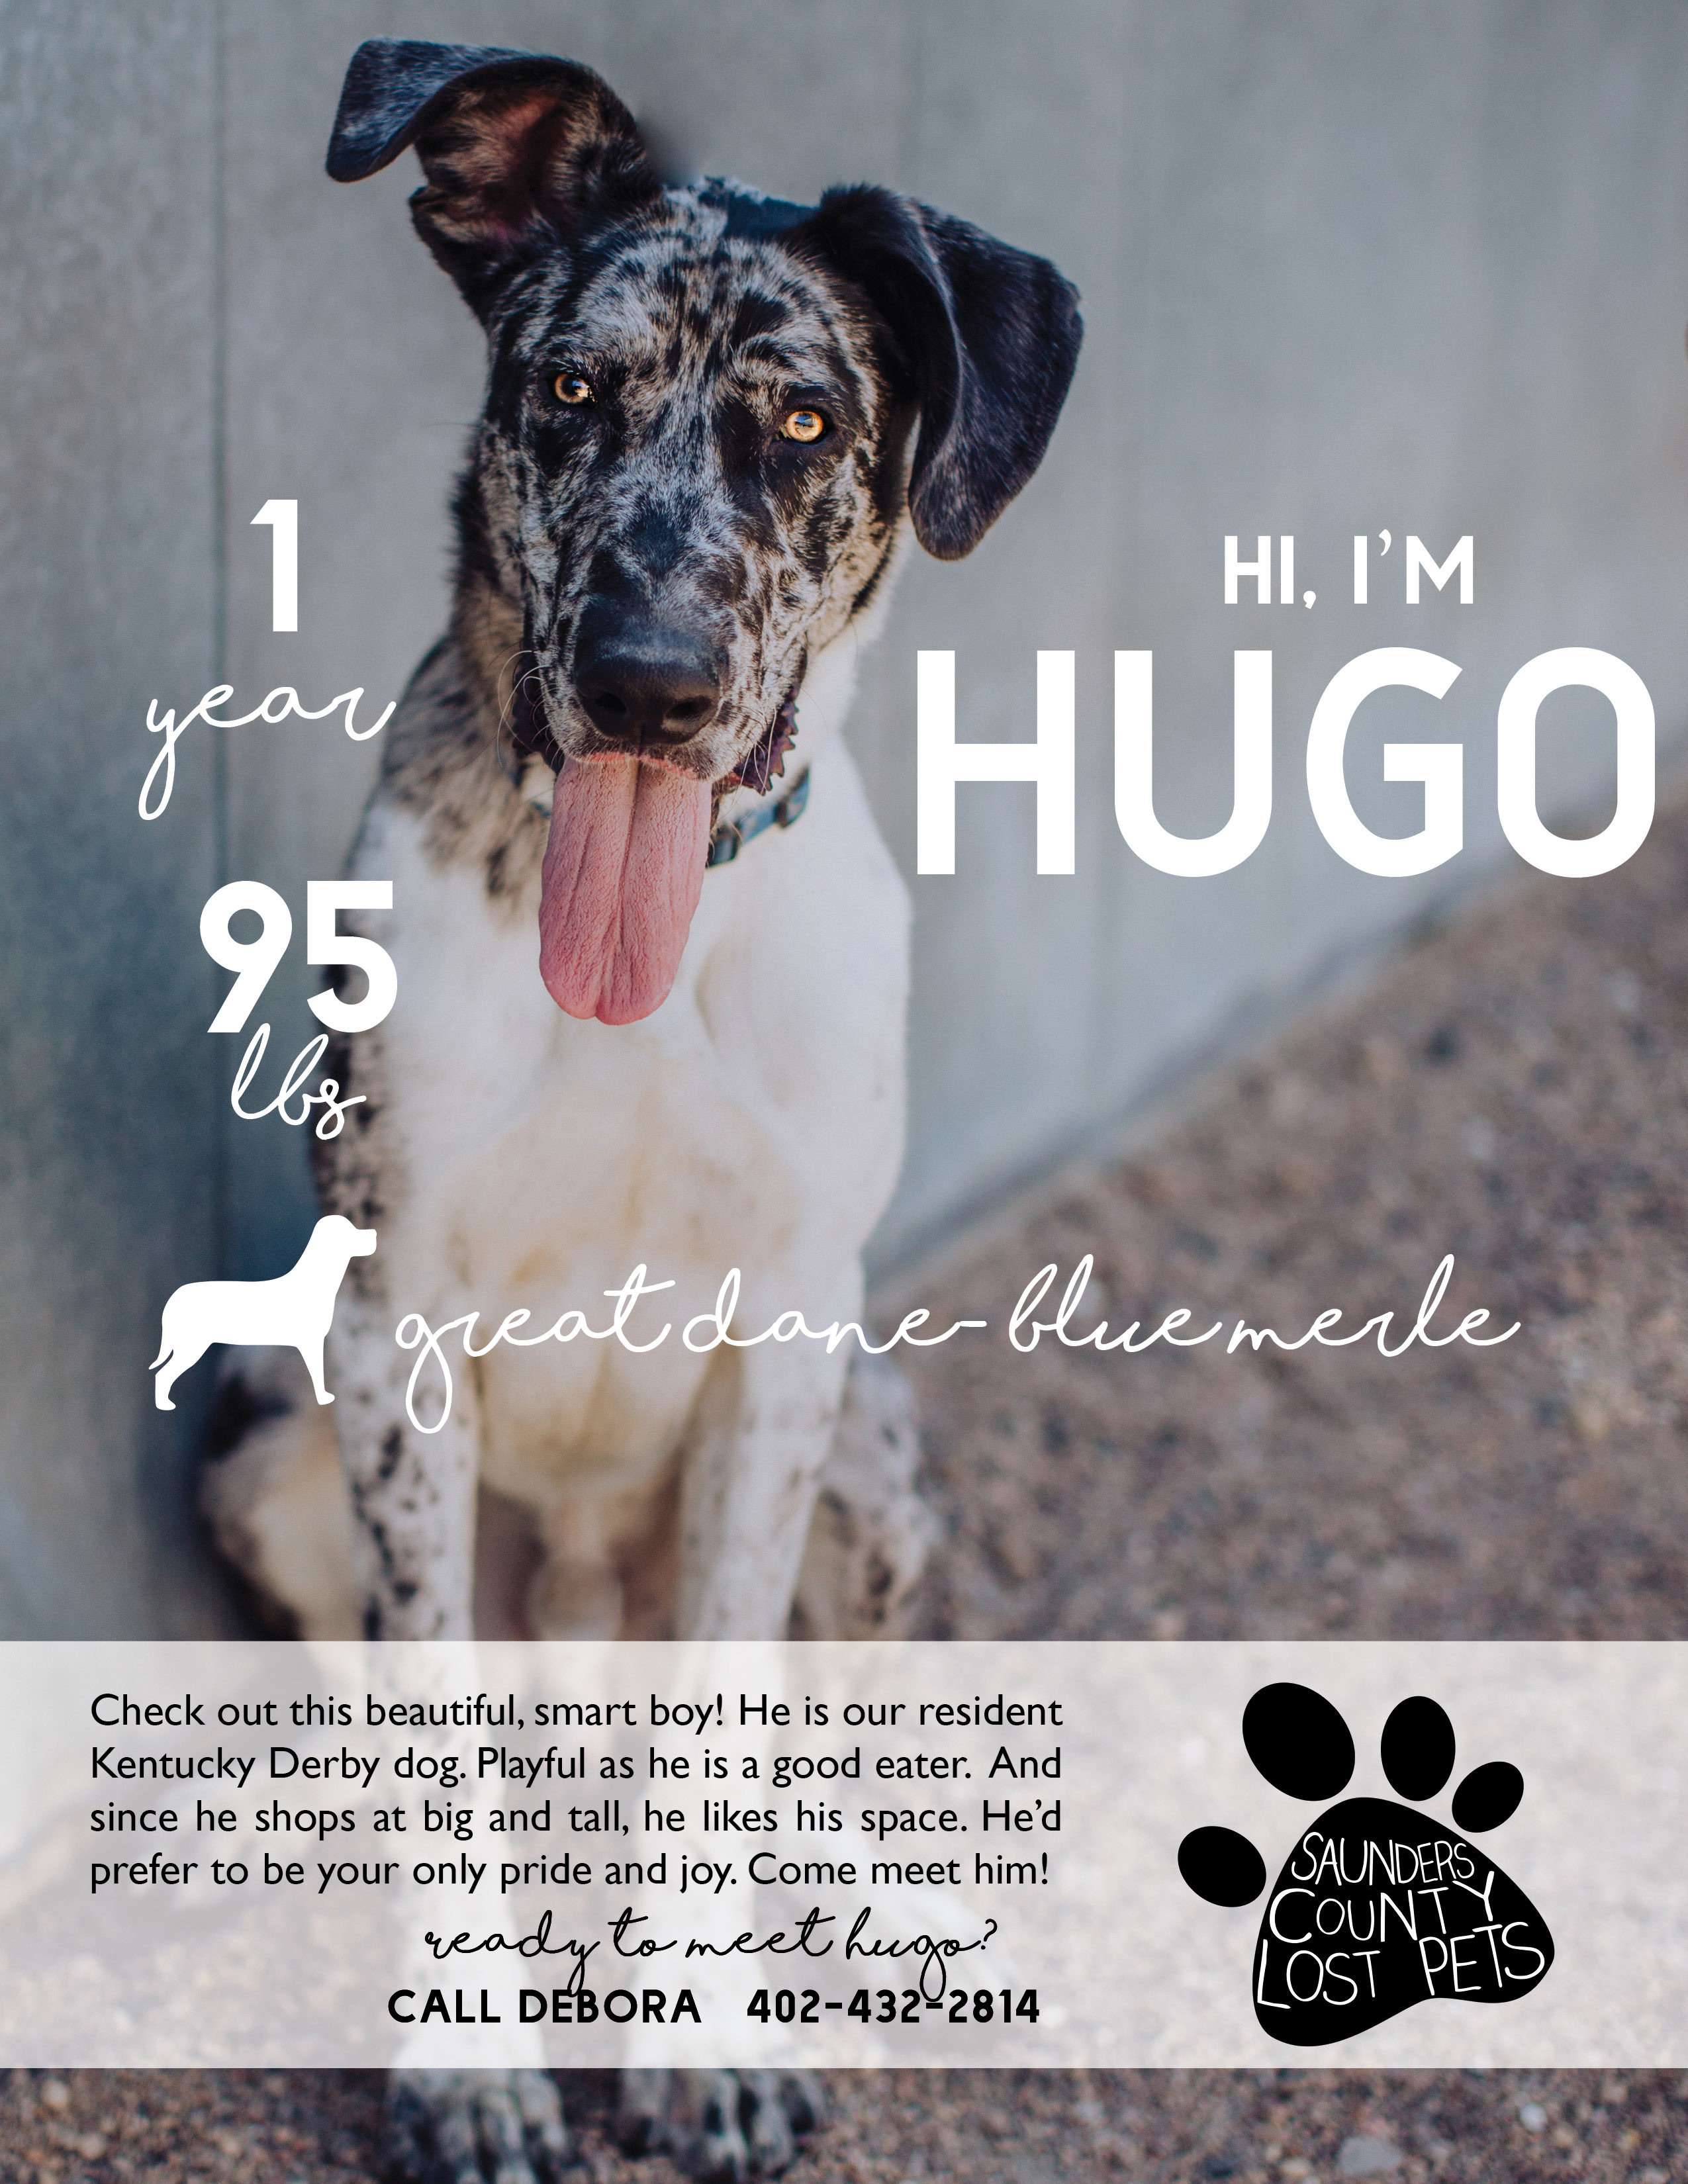 Hugo detail page